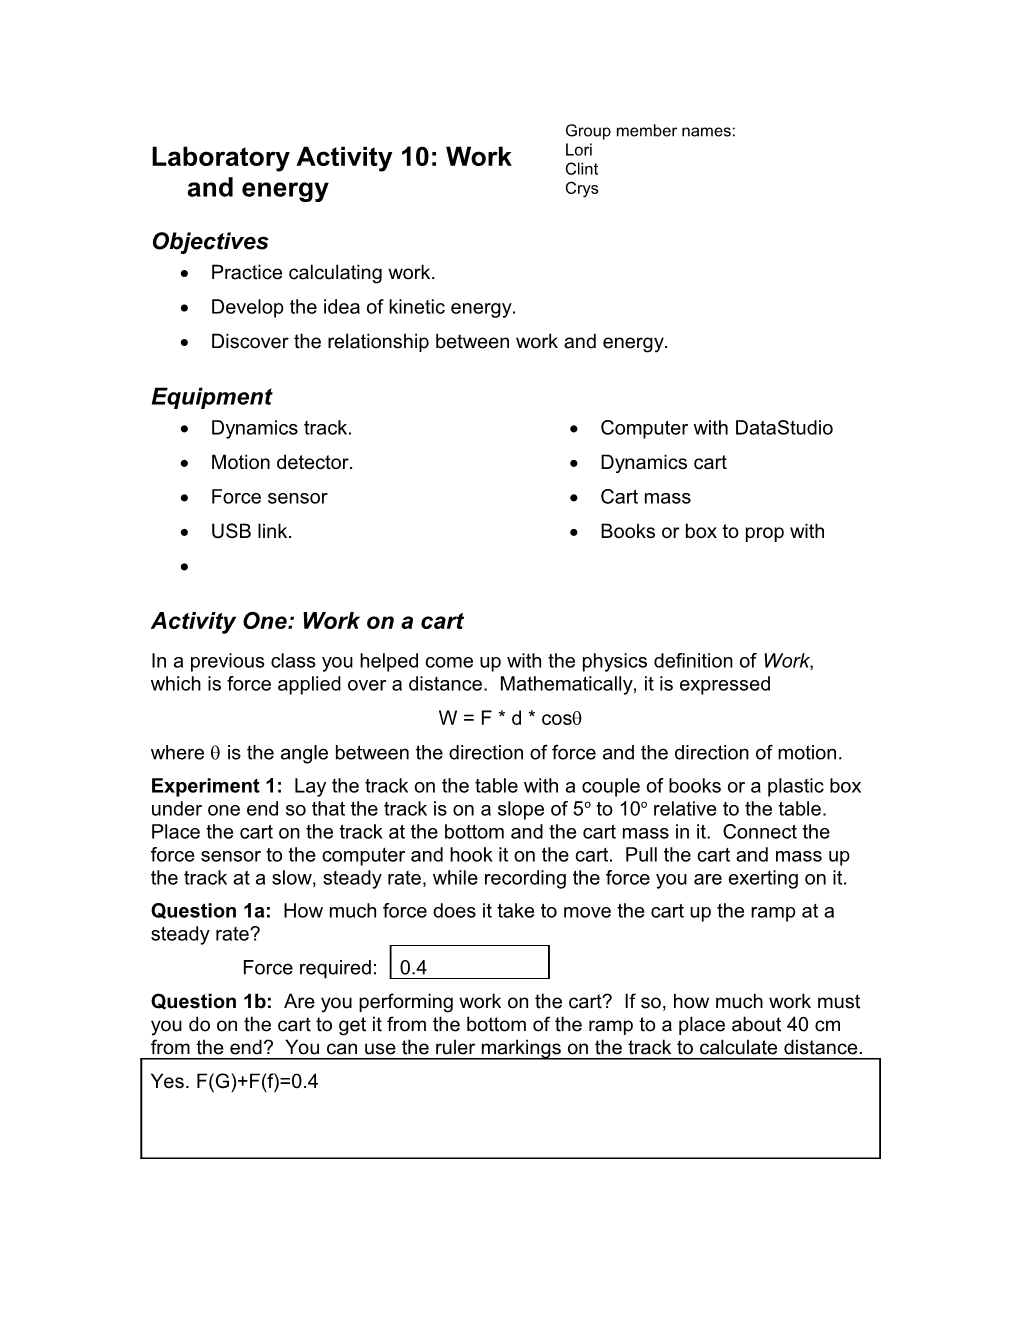 Laboratory Activity 10: Work and Energy